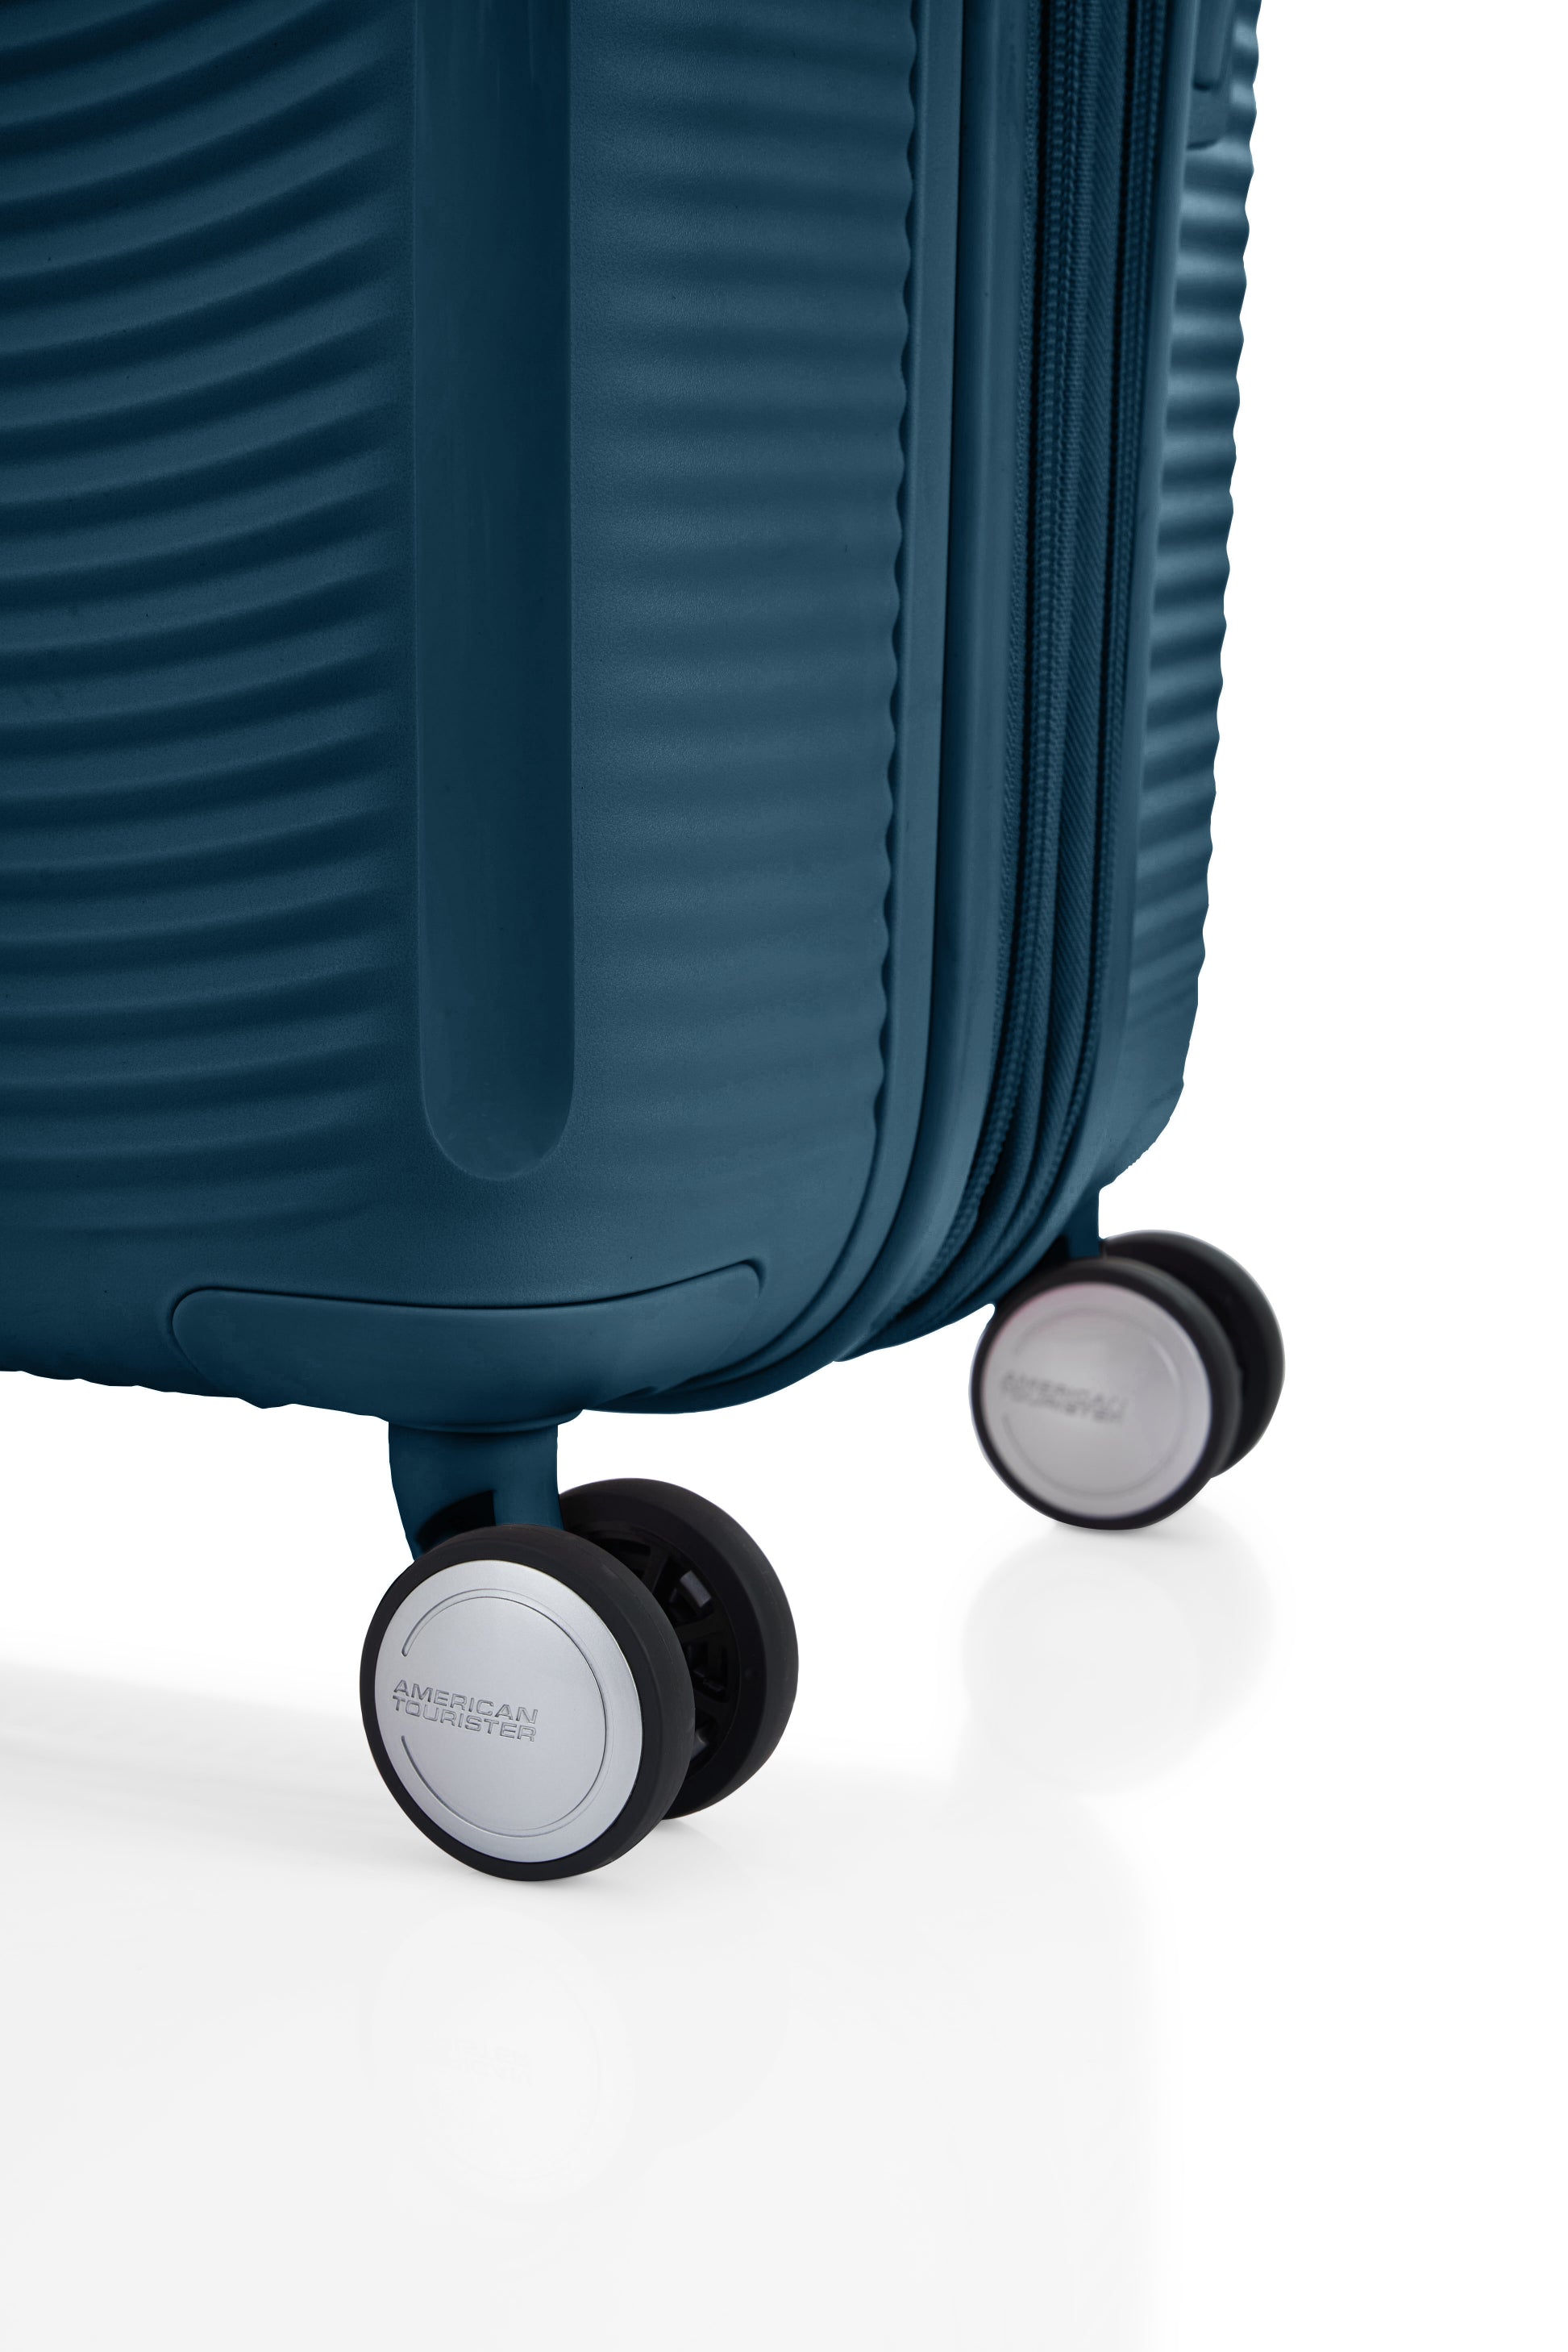 American Tourister - Curio 2.0 80cm Large Suitcase - Varsity Green-10